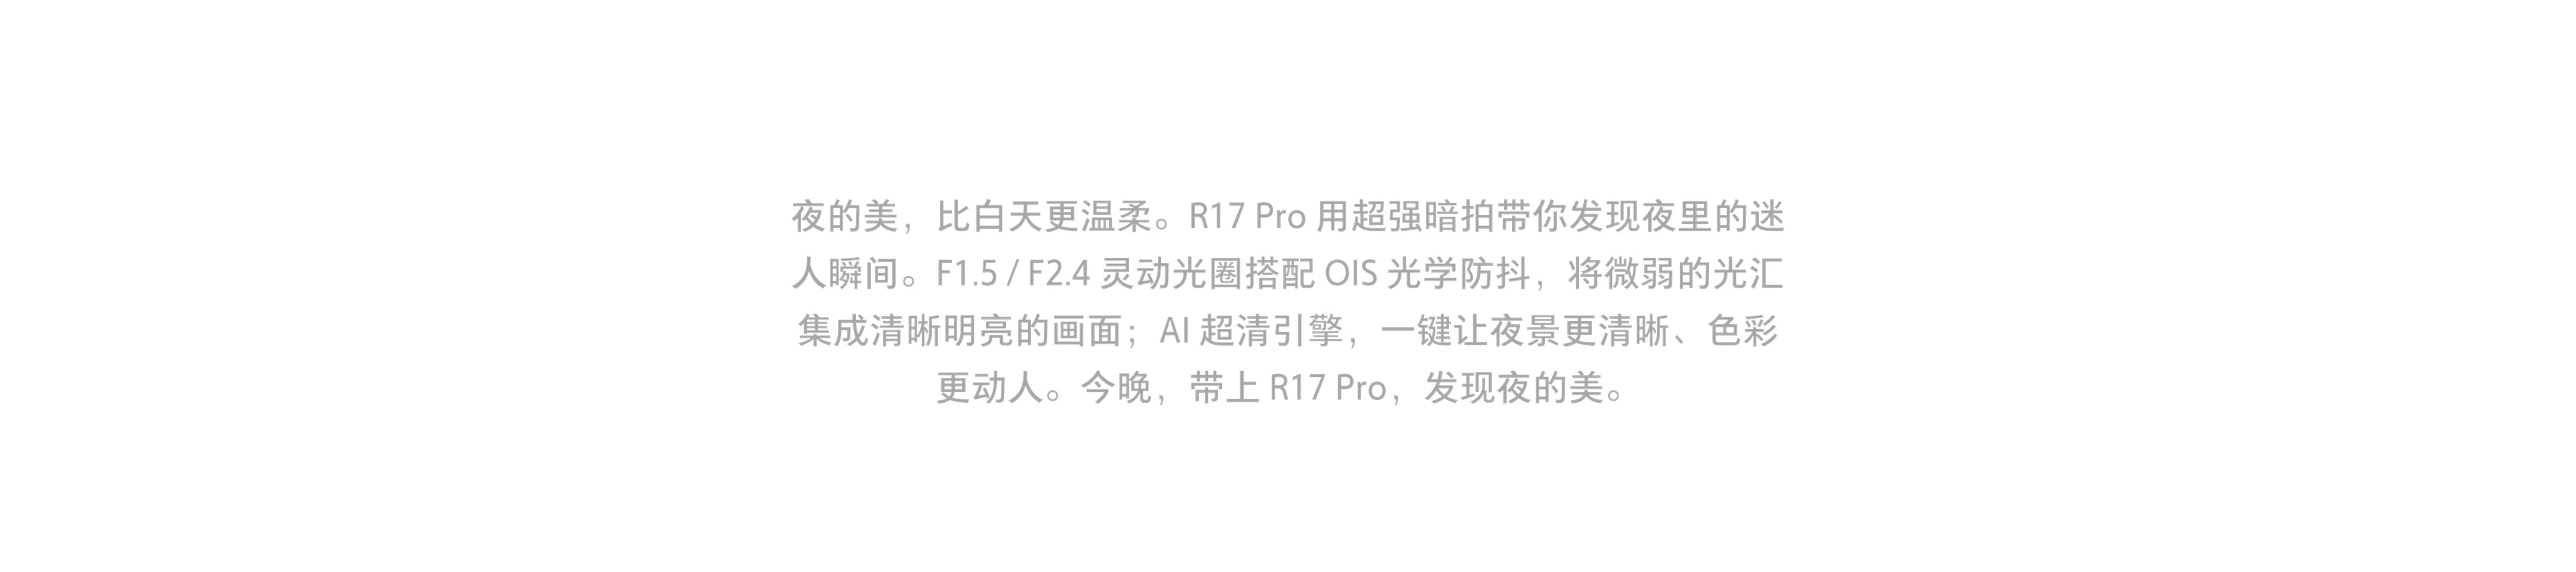 Oppo R17 R17 Pro 随光而变 心动所在 报价 配置参数 图片 Oppo 智能手机官网